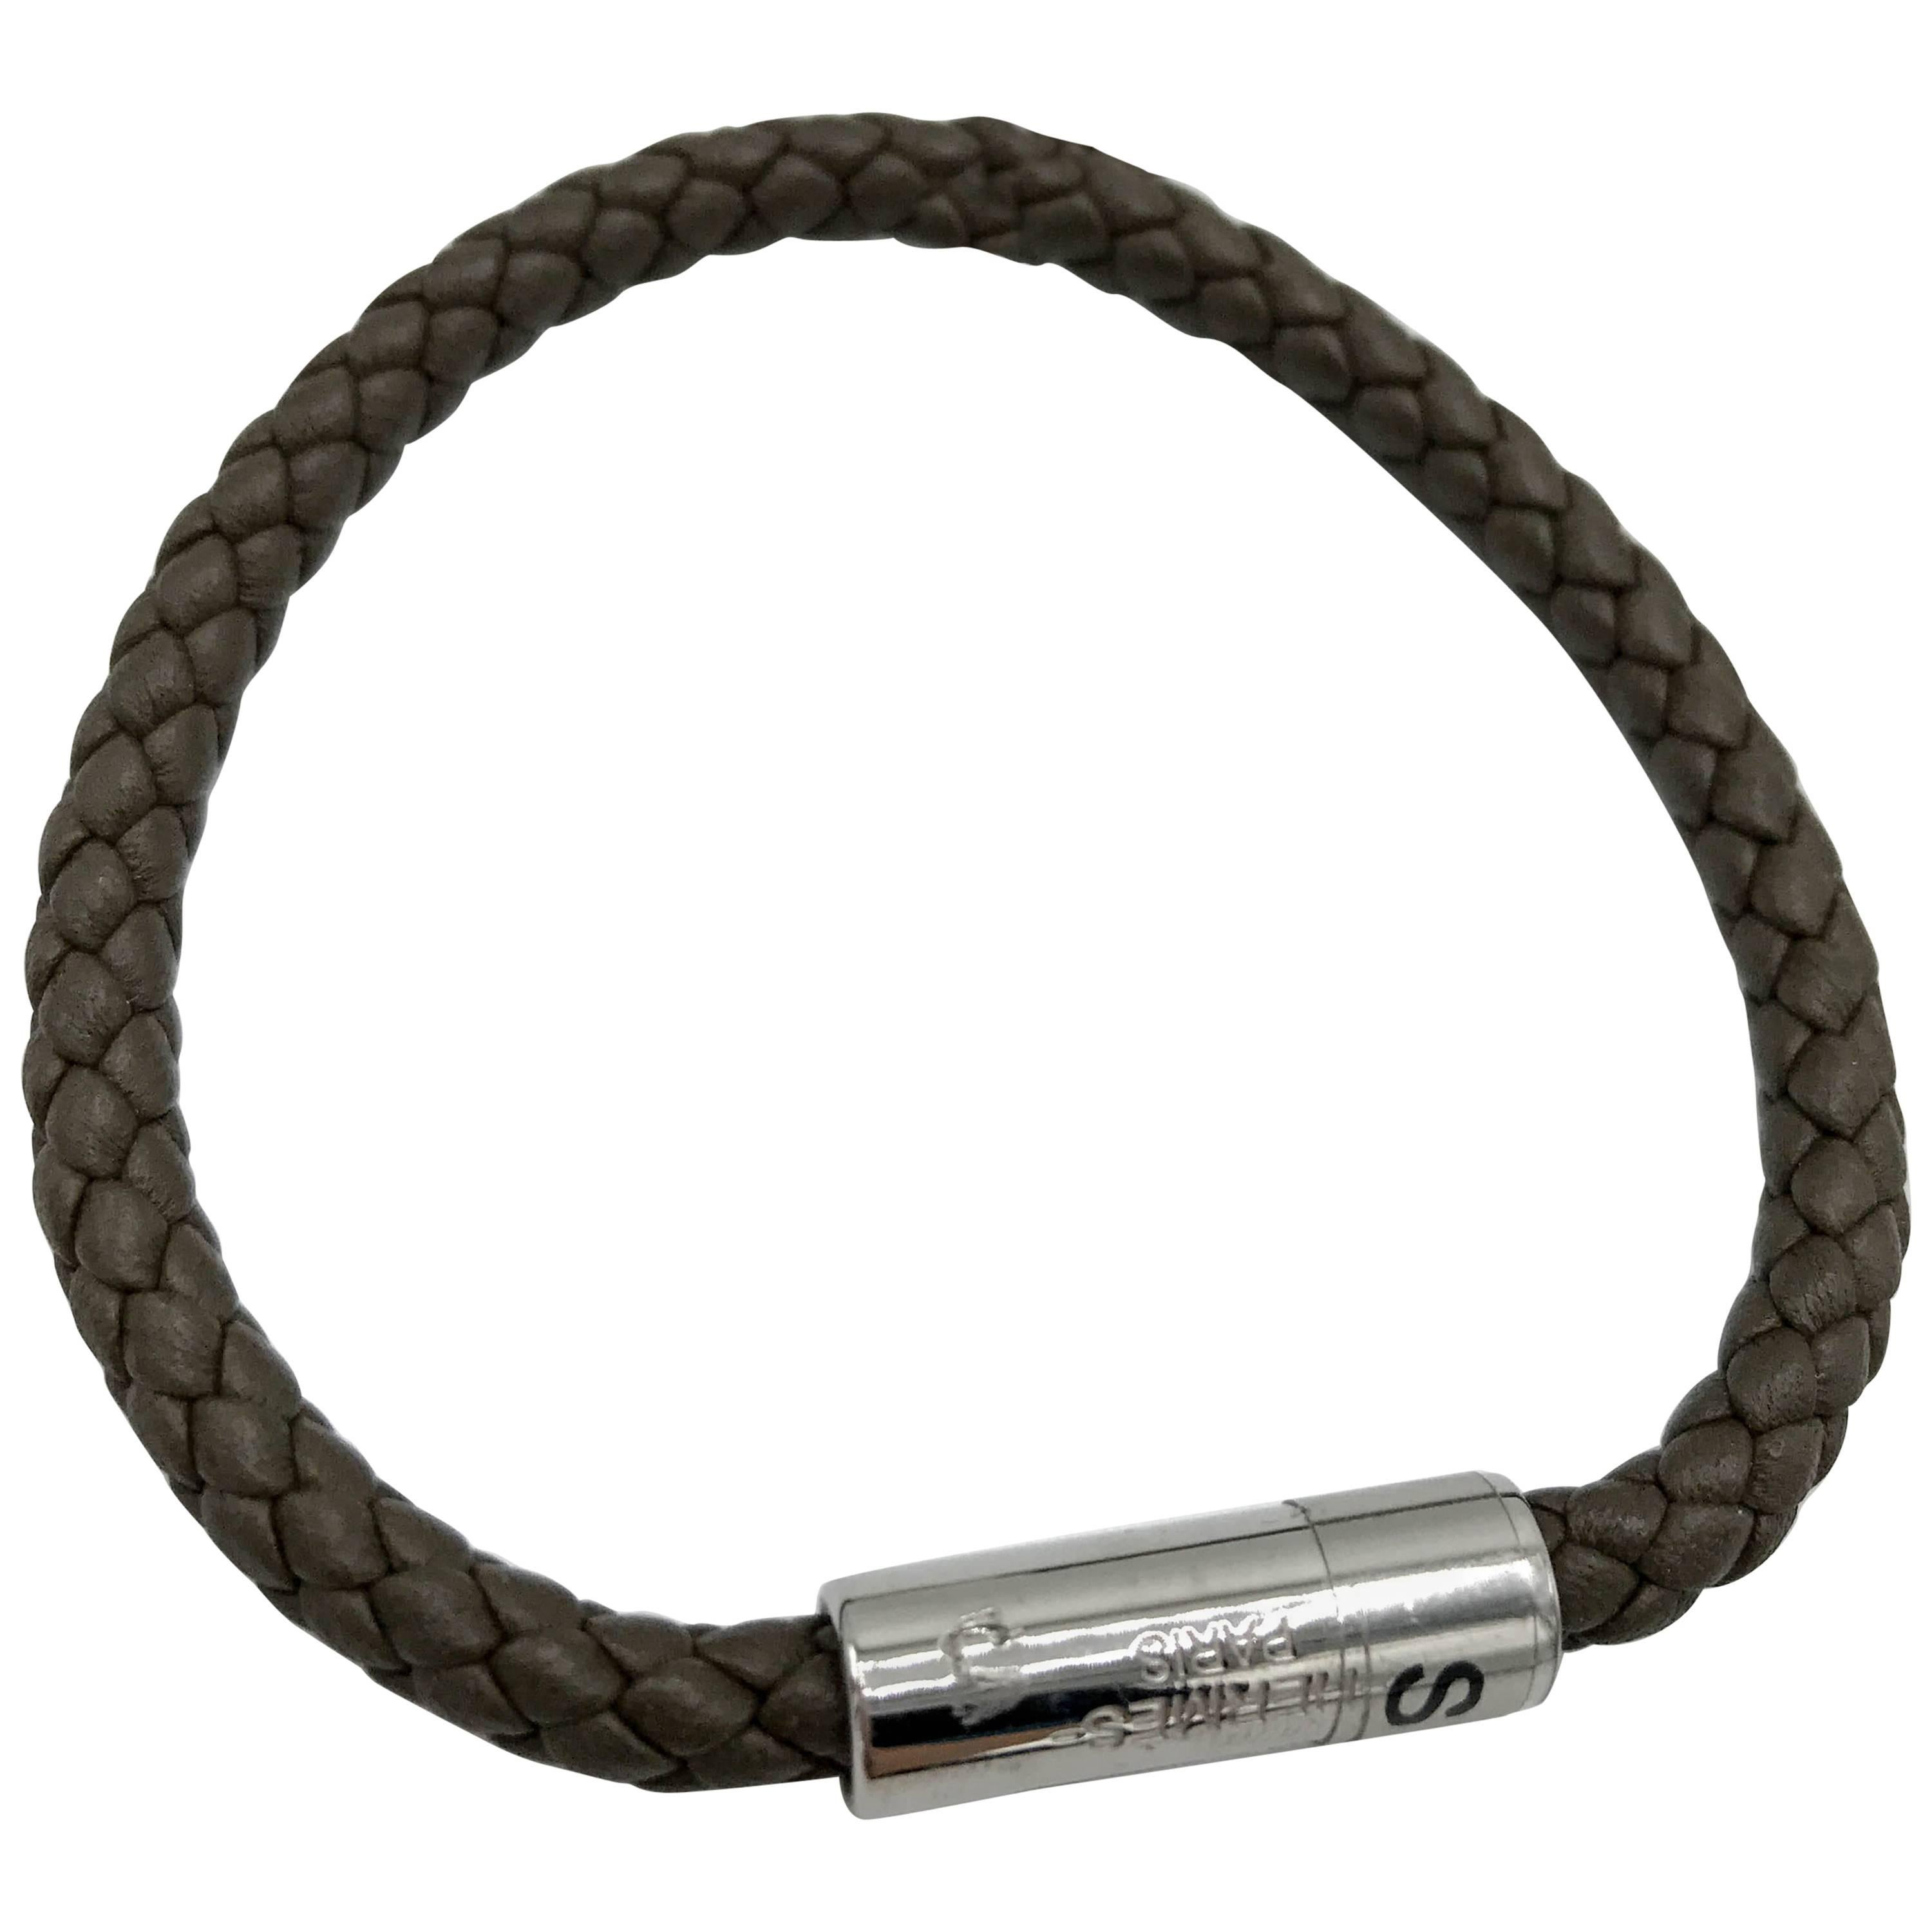 Hermes Leather Bracelet. Color Is F6 Eucalyptus Size S